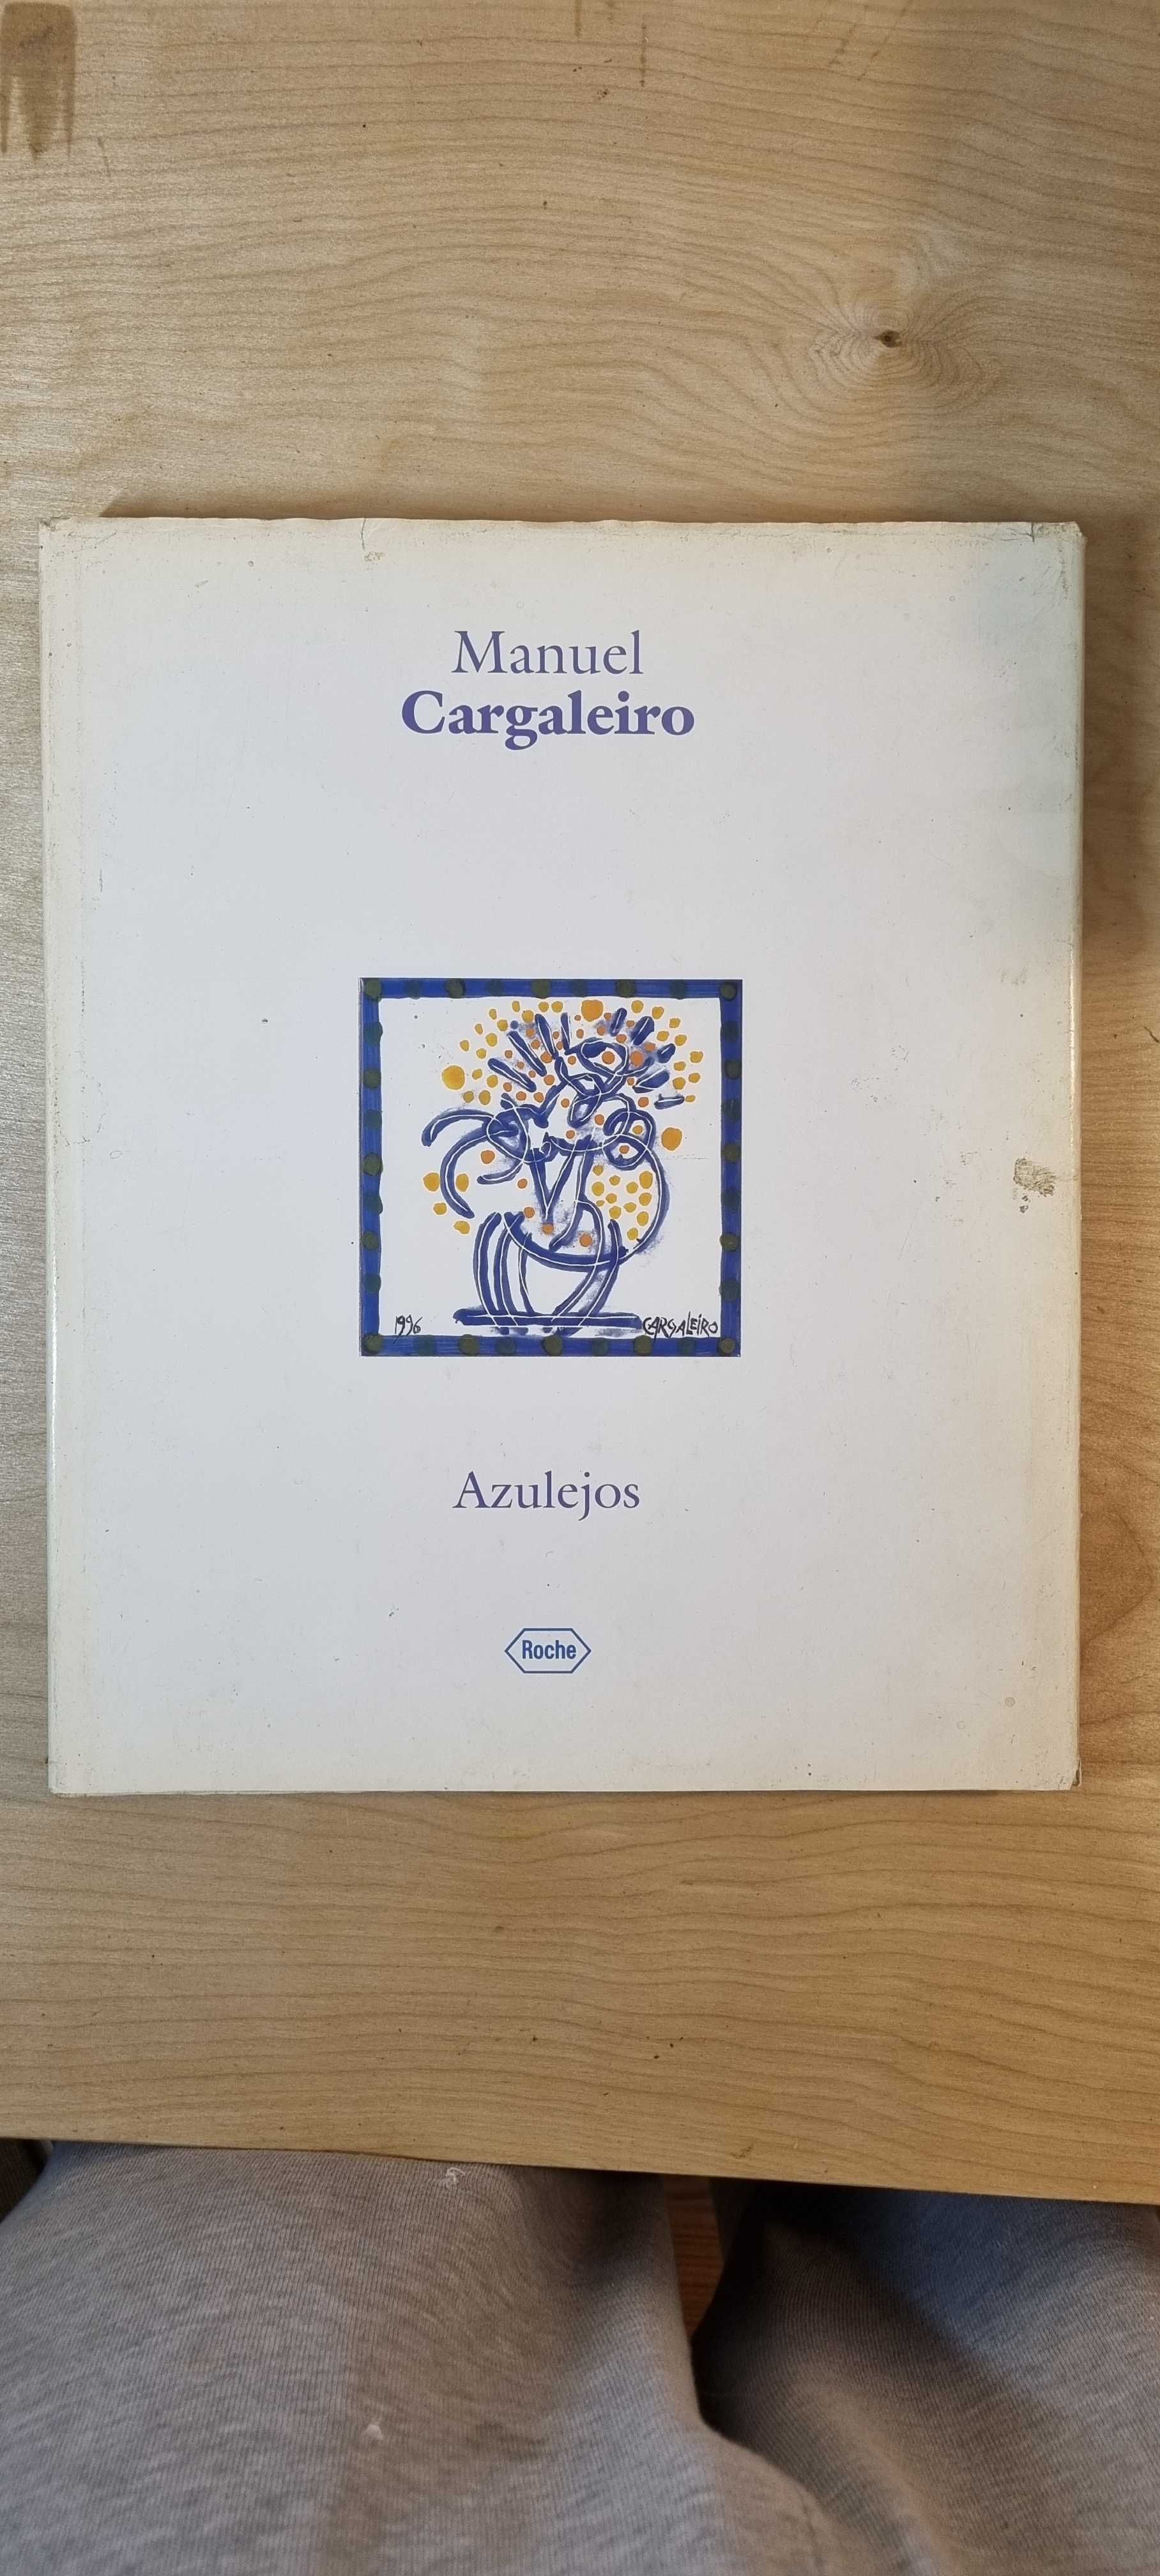 Livro "Manuel Cargaleiro - Azulejos" Roche